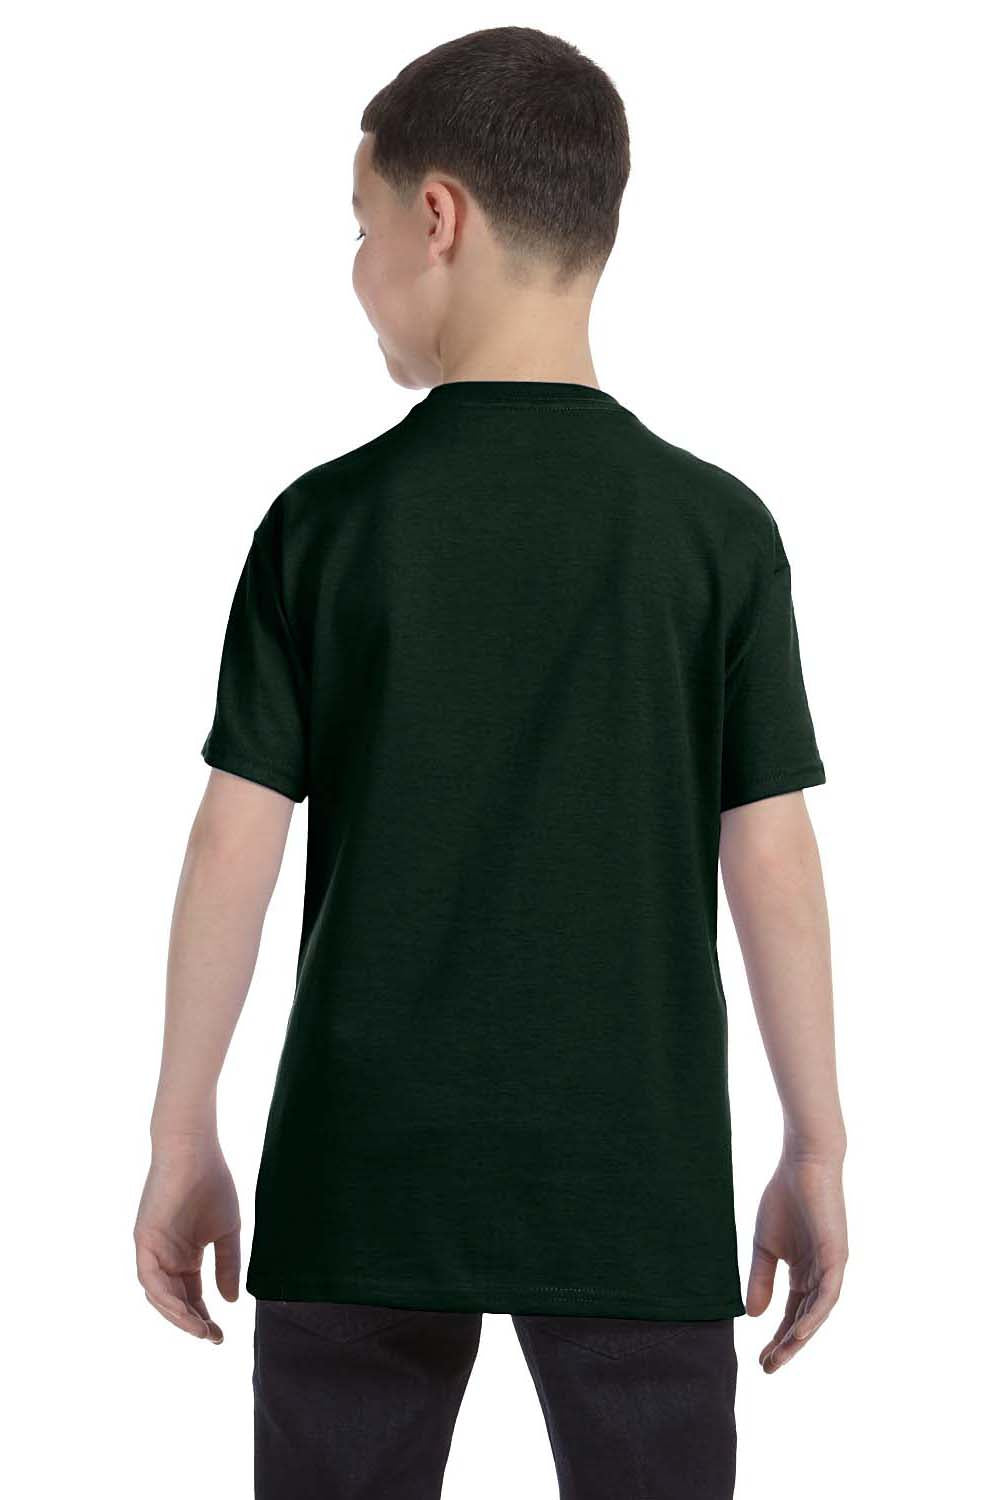 Hanes 54500 Youth ComfortSoft Short Sleeve Crewneck T-Shirt Forest Green Back